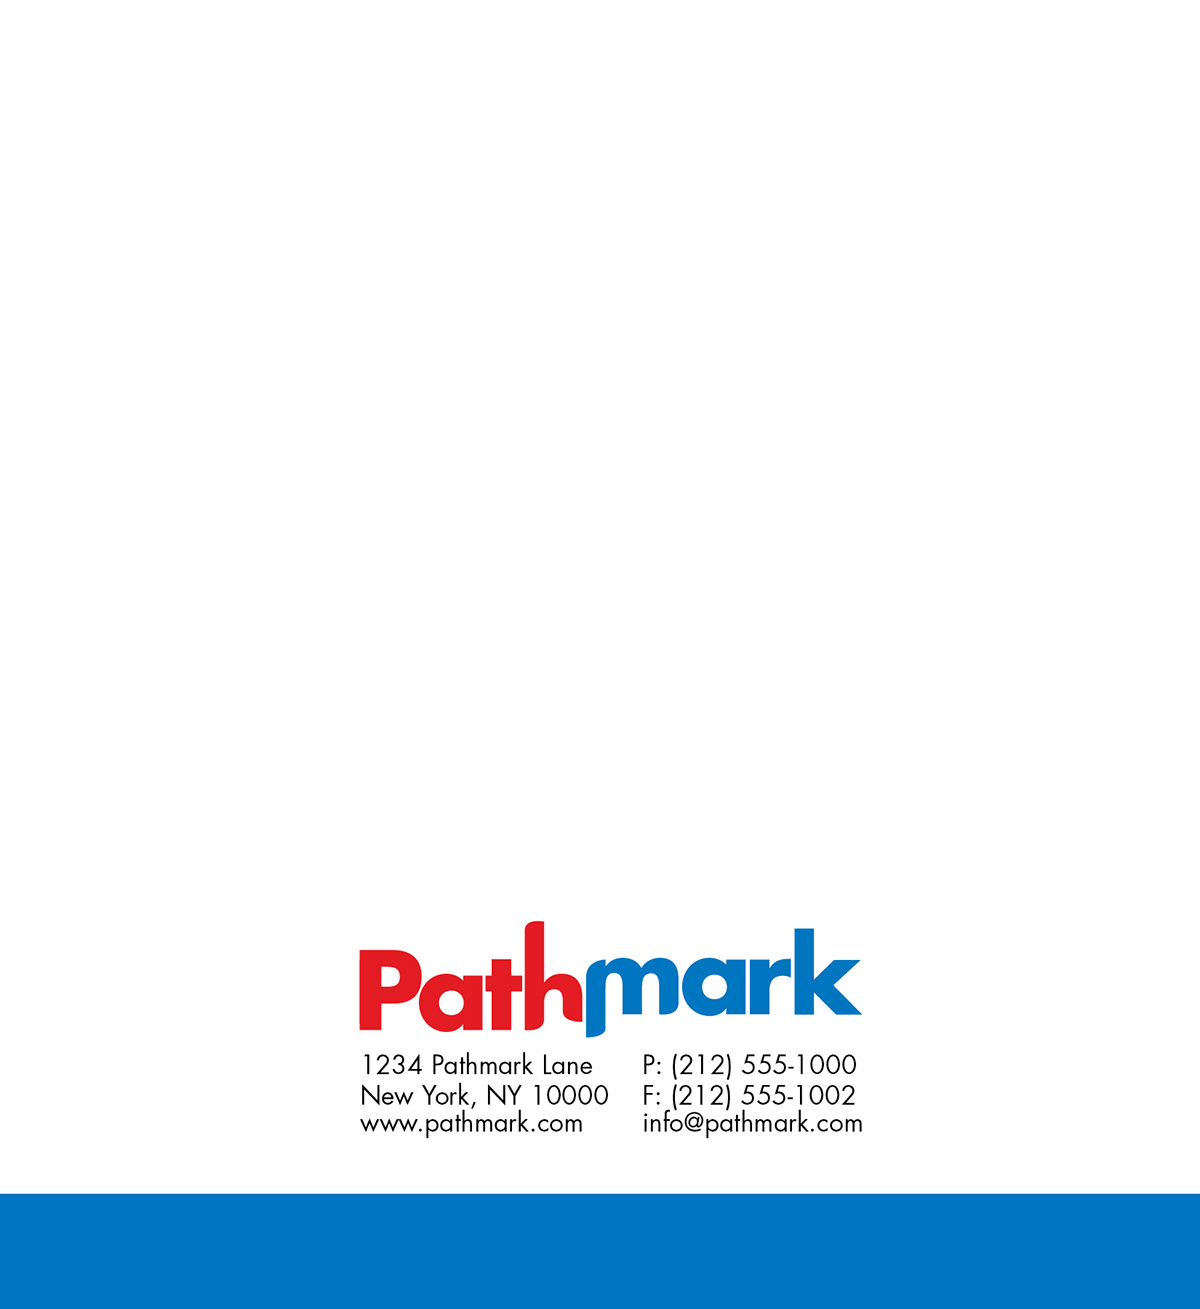 Pathmark rebranding Branding design letterhead Business Envelope envelope business card Fax Cover Sheet Stationery Corporate Standards Manual csm Graphics Standards Manual